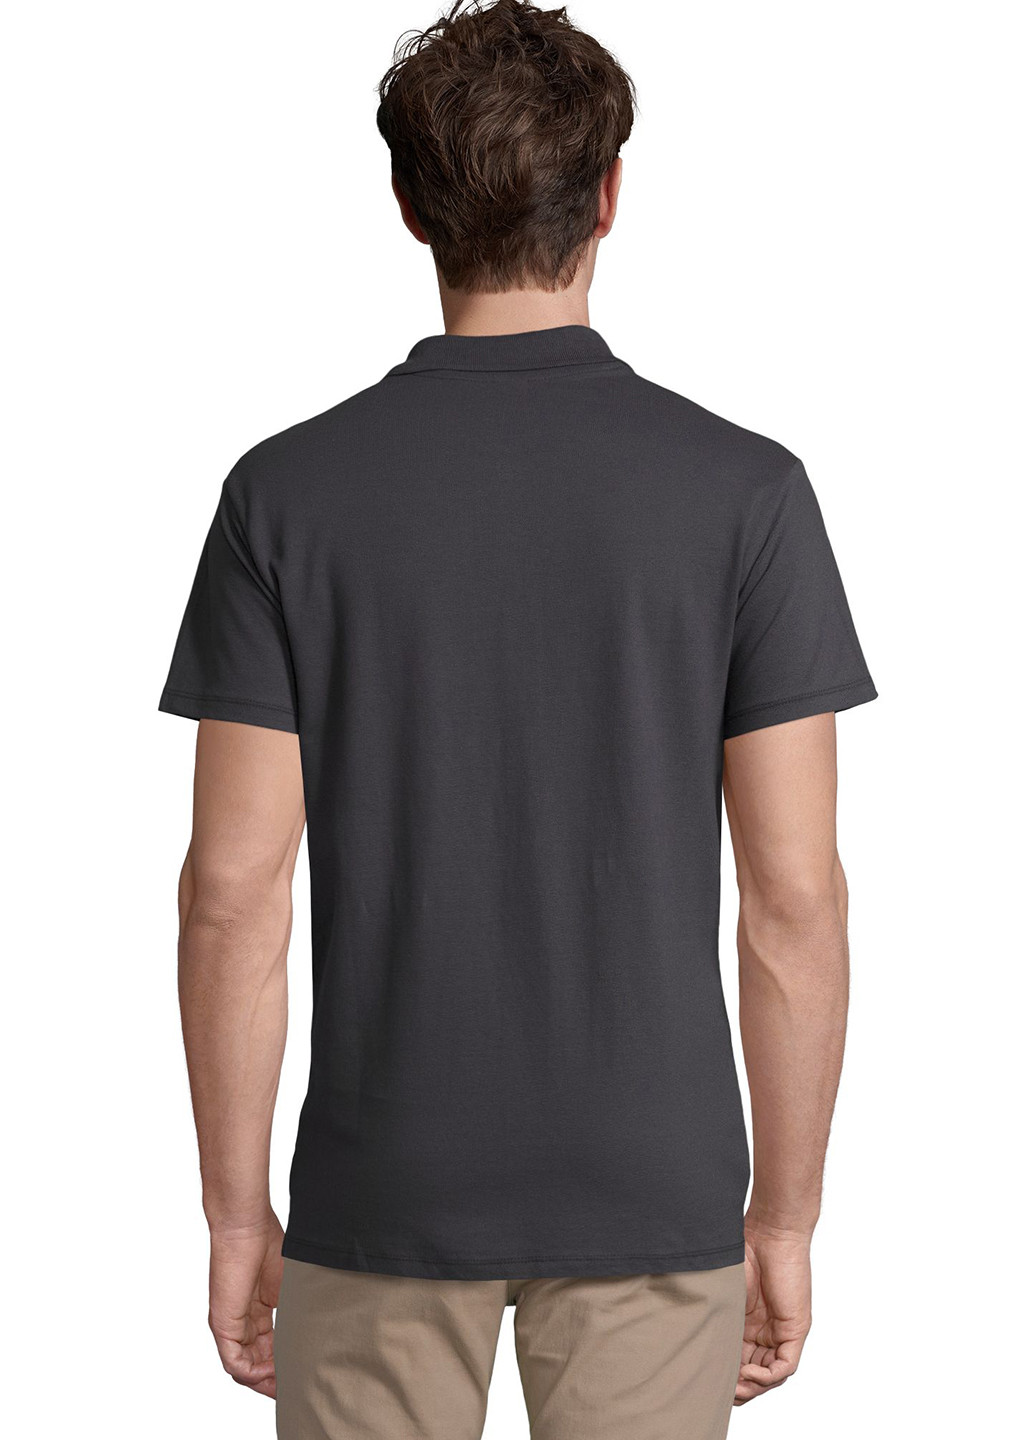 Темно-серая футболка-поло для мужчин Sol's однотонная